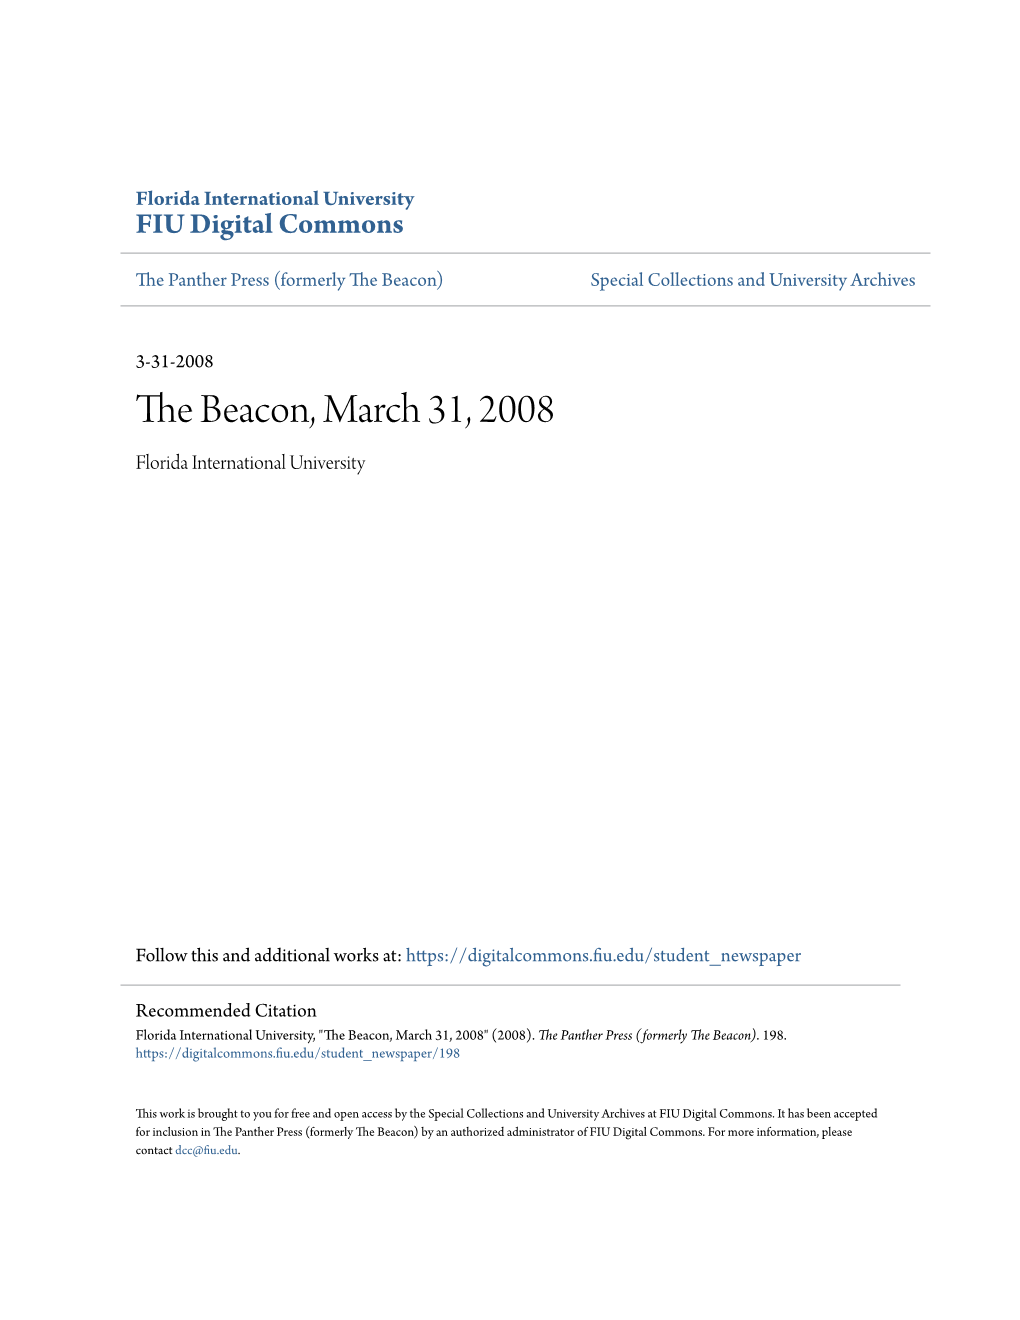 The Beacon, March 31, 2008 Florida International University